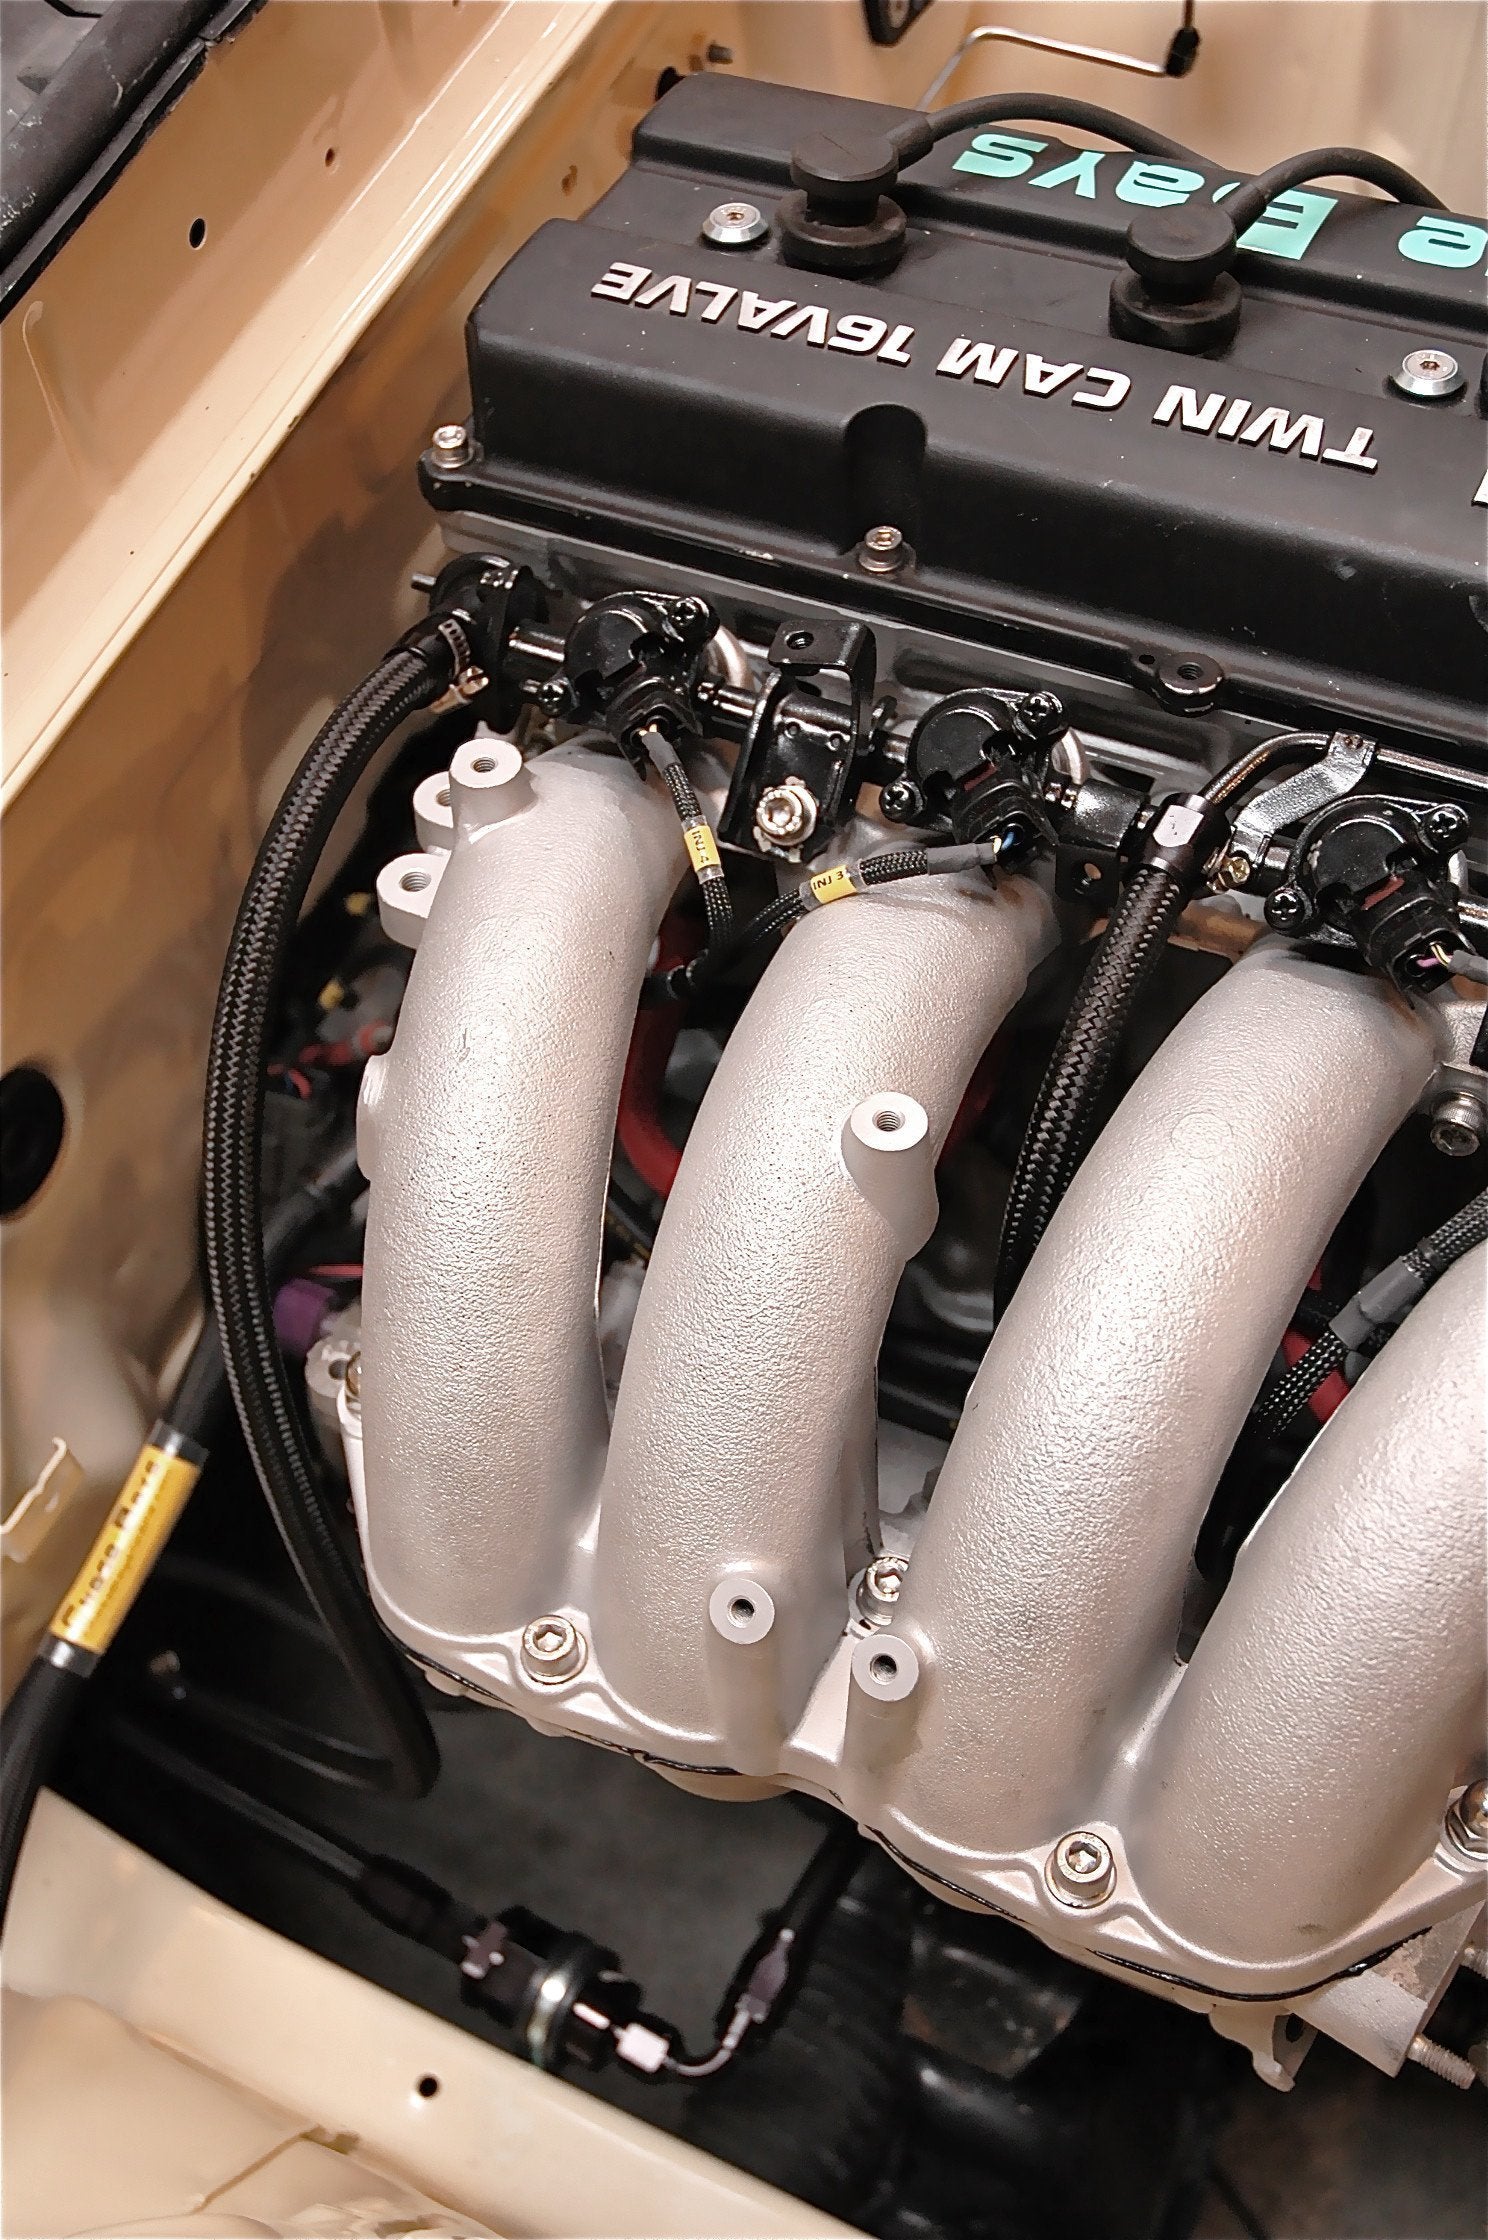 CHASE BAYS Nissan Skyline R32 R33 Kraftstoff Leitung Kit mit Nissan RB20DET RB25DET RB26DETT Motor - PARTS33 GmbH